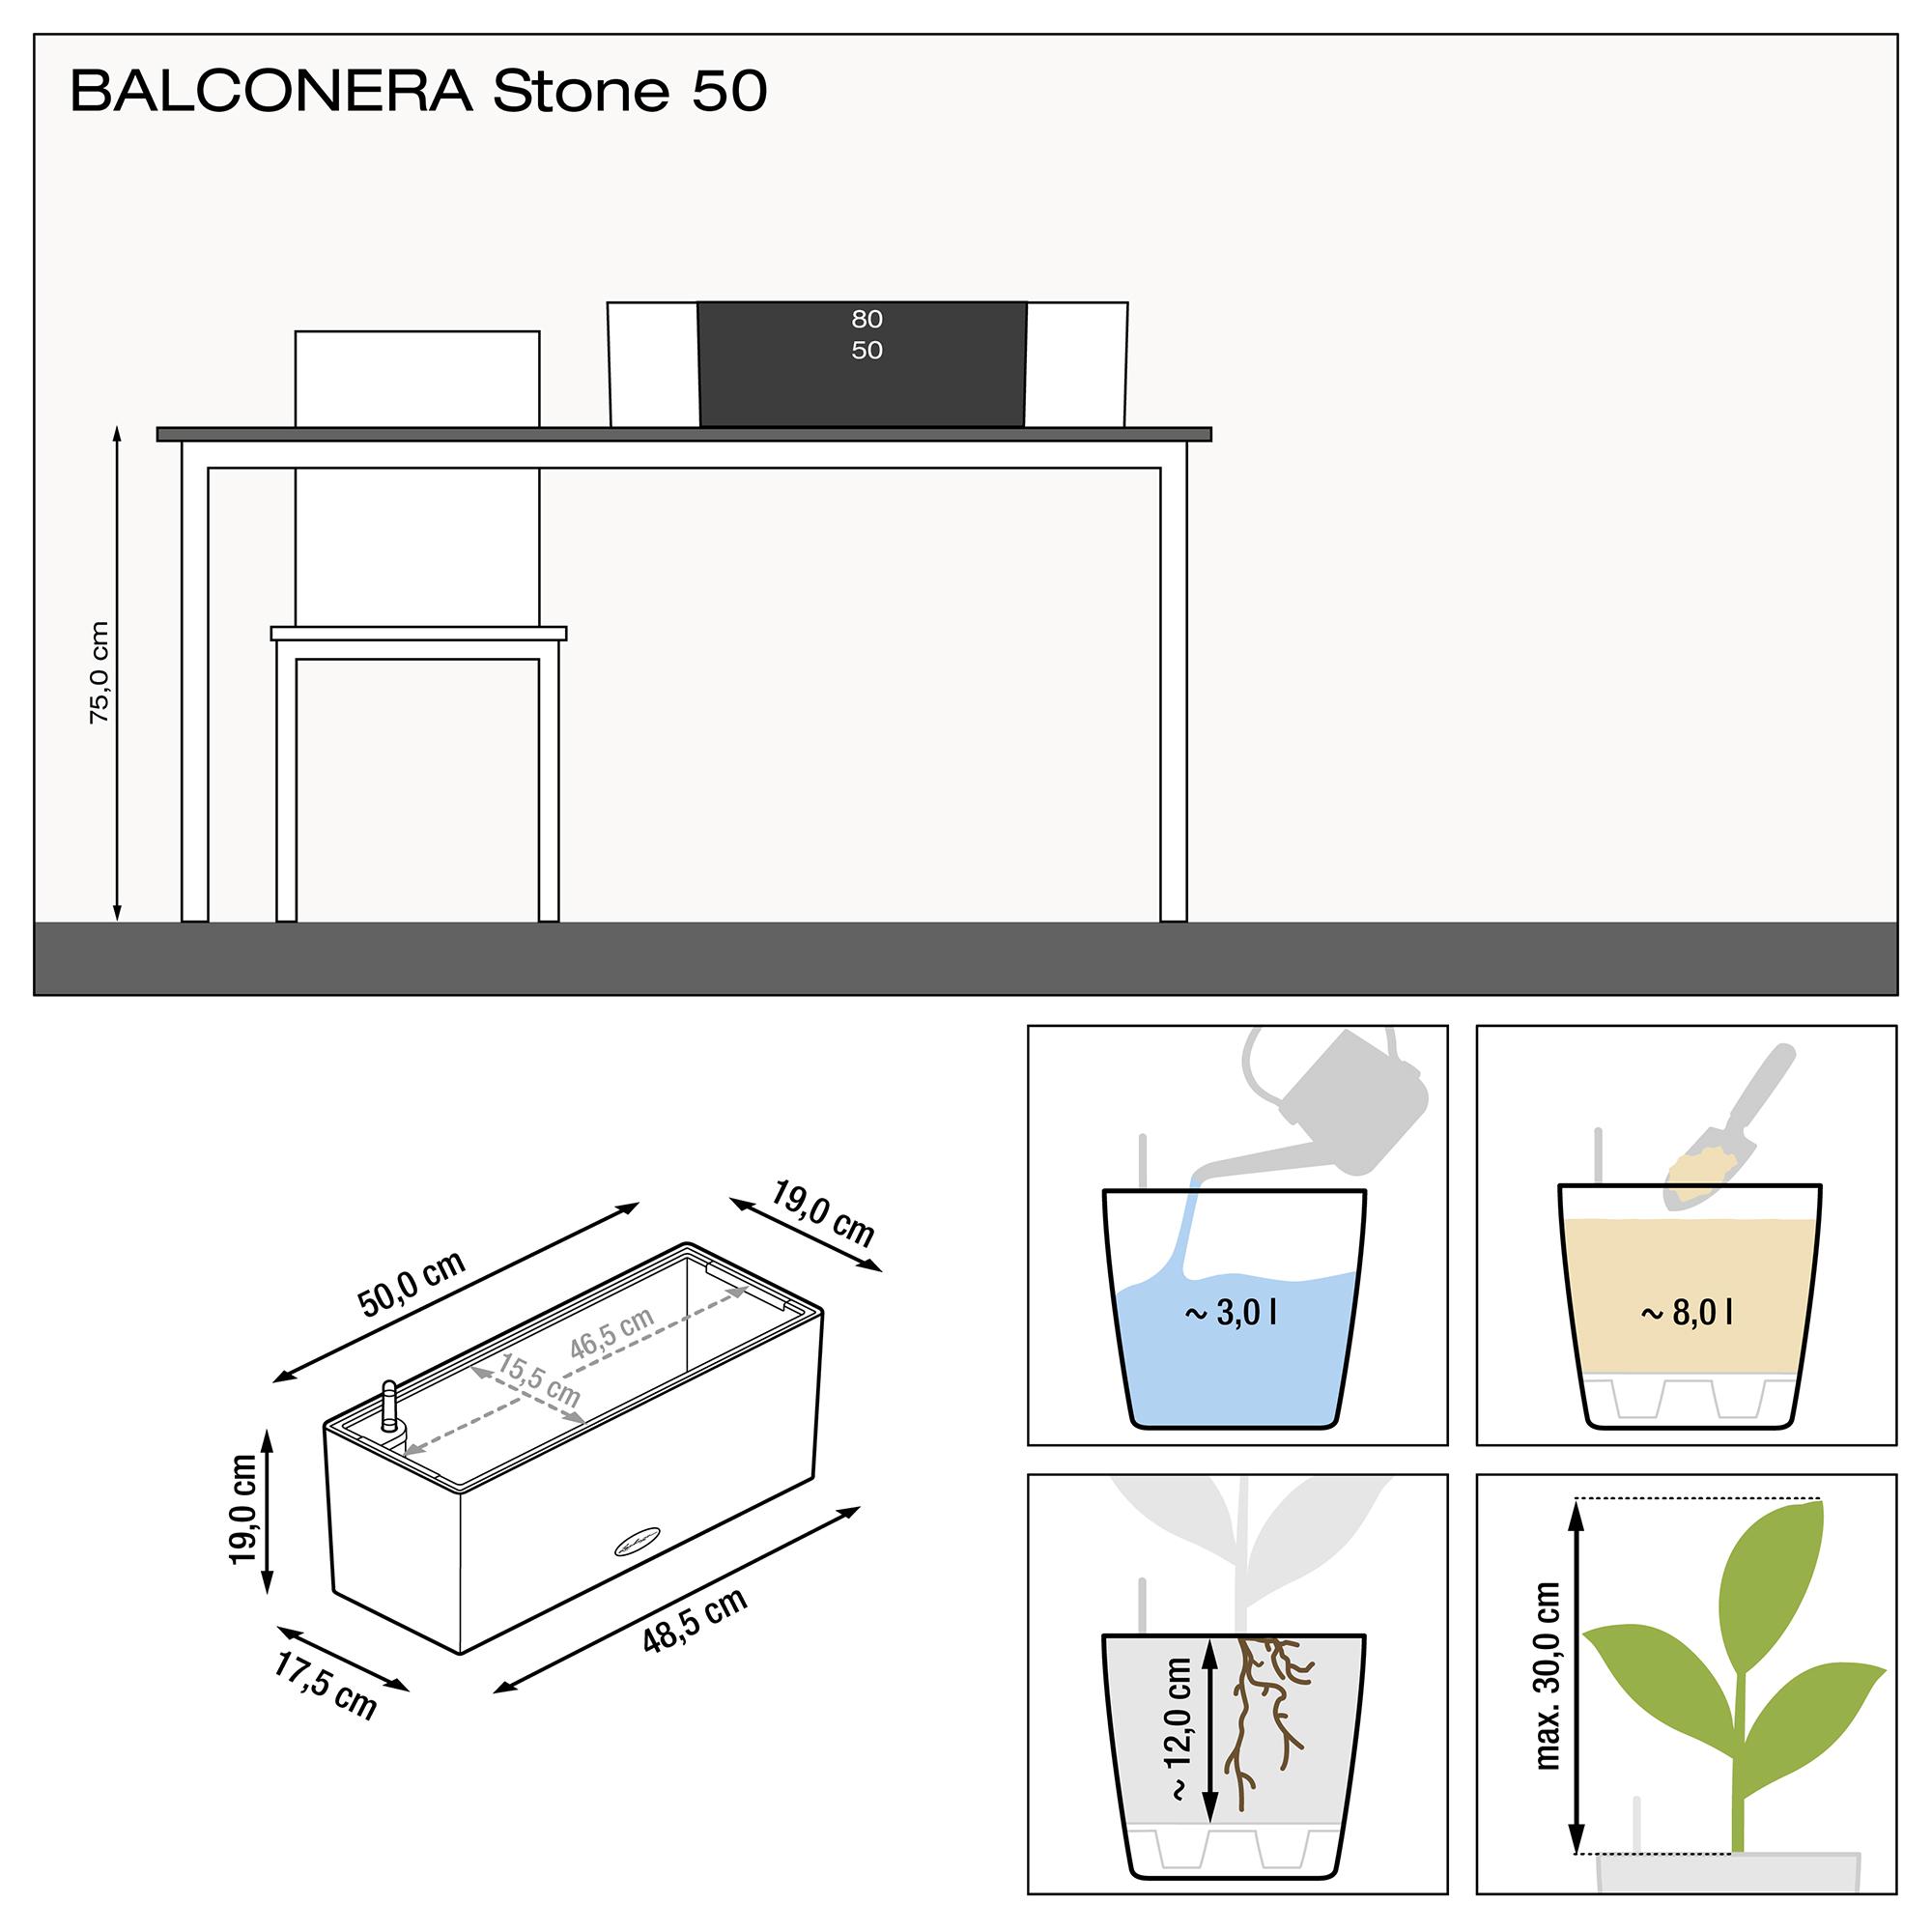 le_balconera-stone50_product_addi_nz Thumb